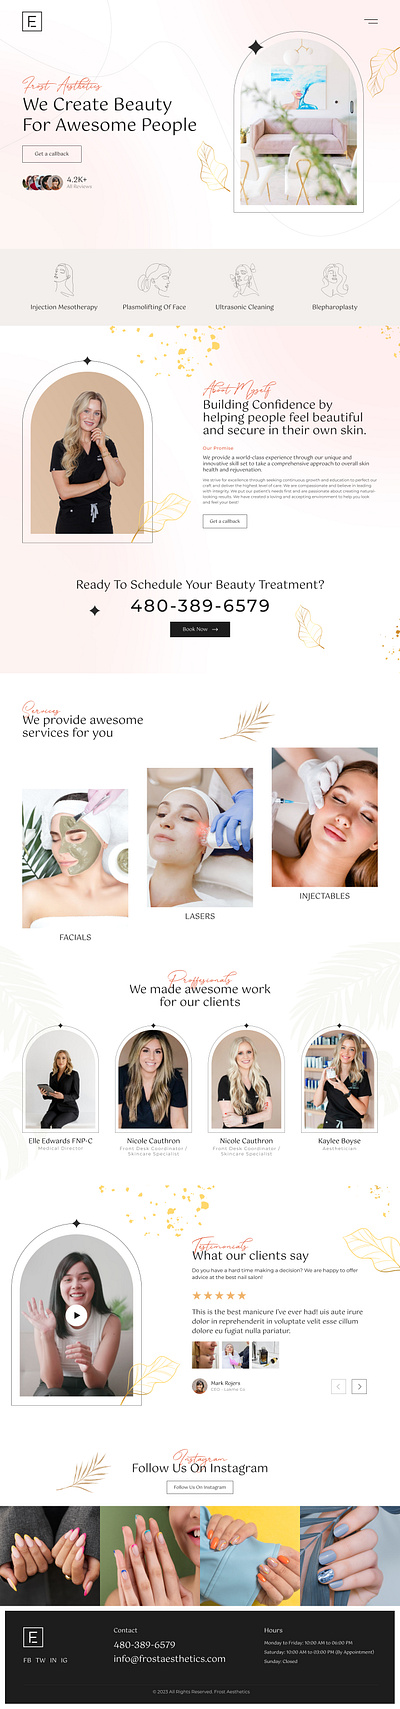 Skin Care Brand - Website Design branding landingpage skincare skincarebrand skincarewebsite uiux webpagedesign website inspirational websitedesign